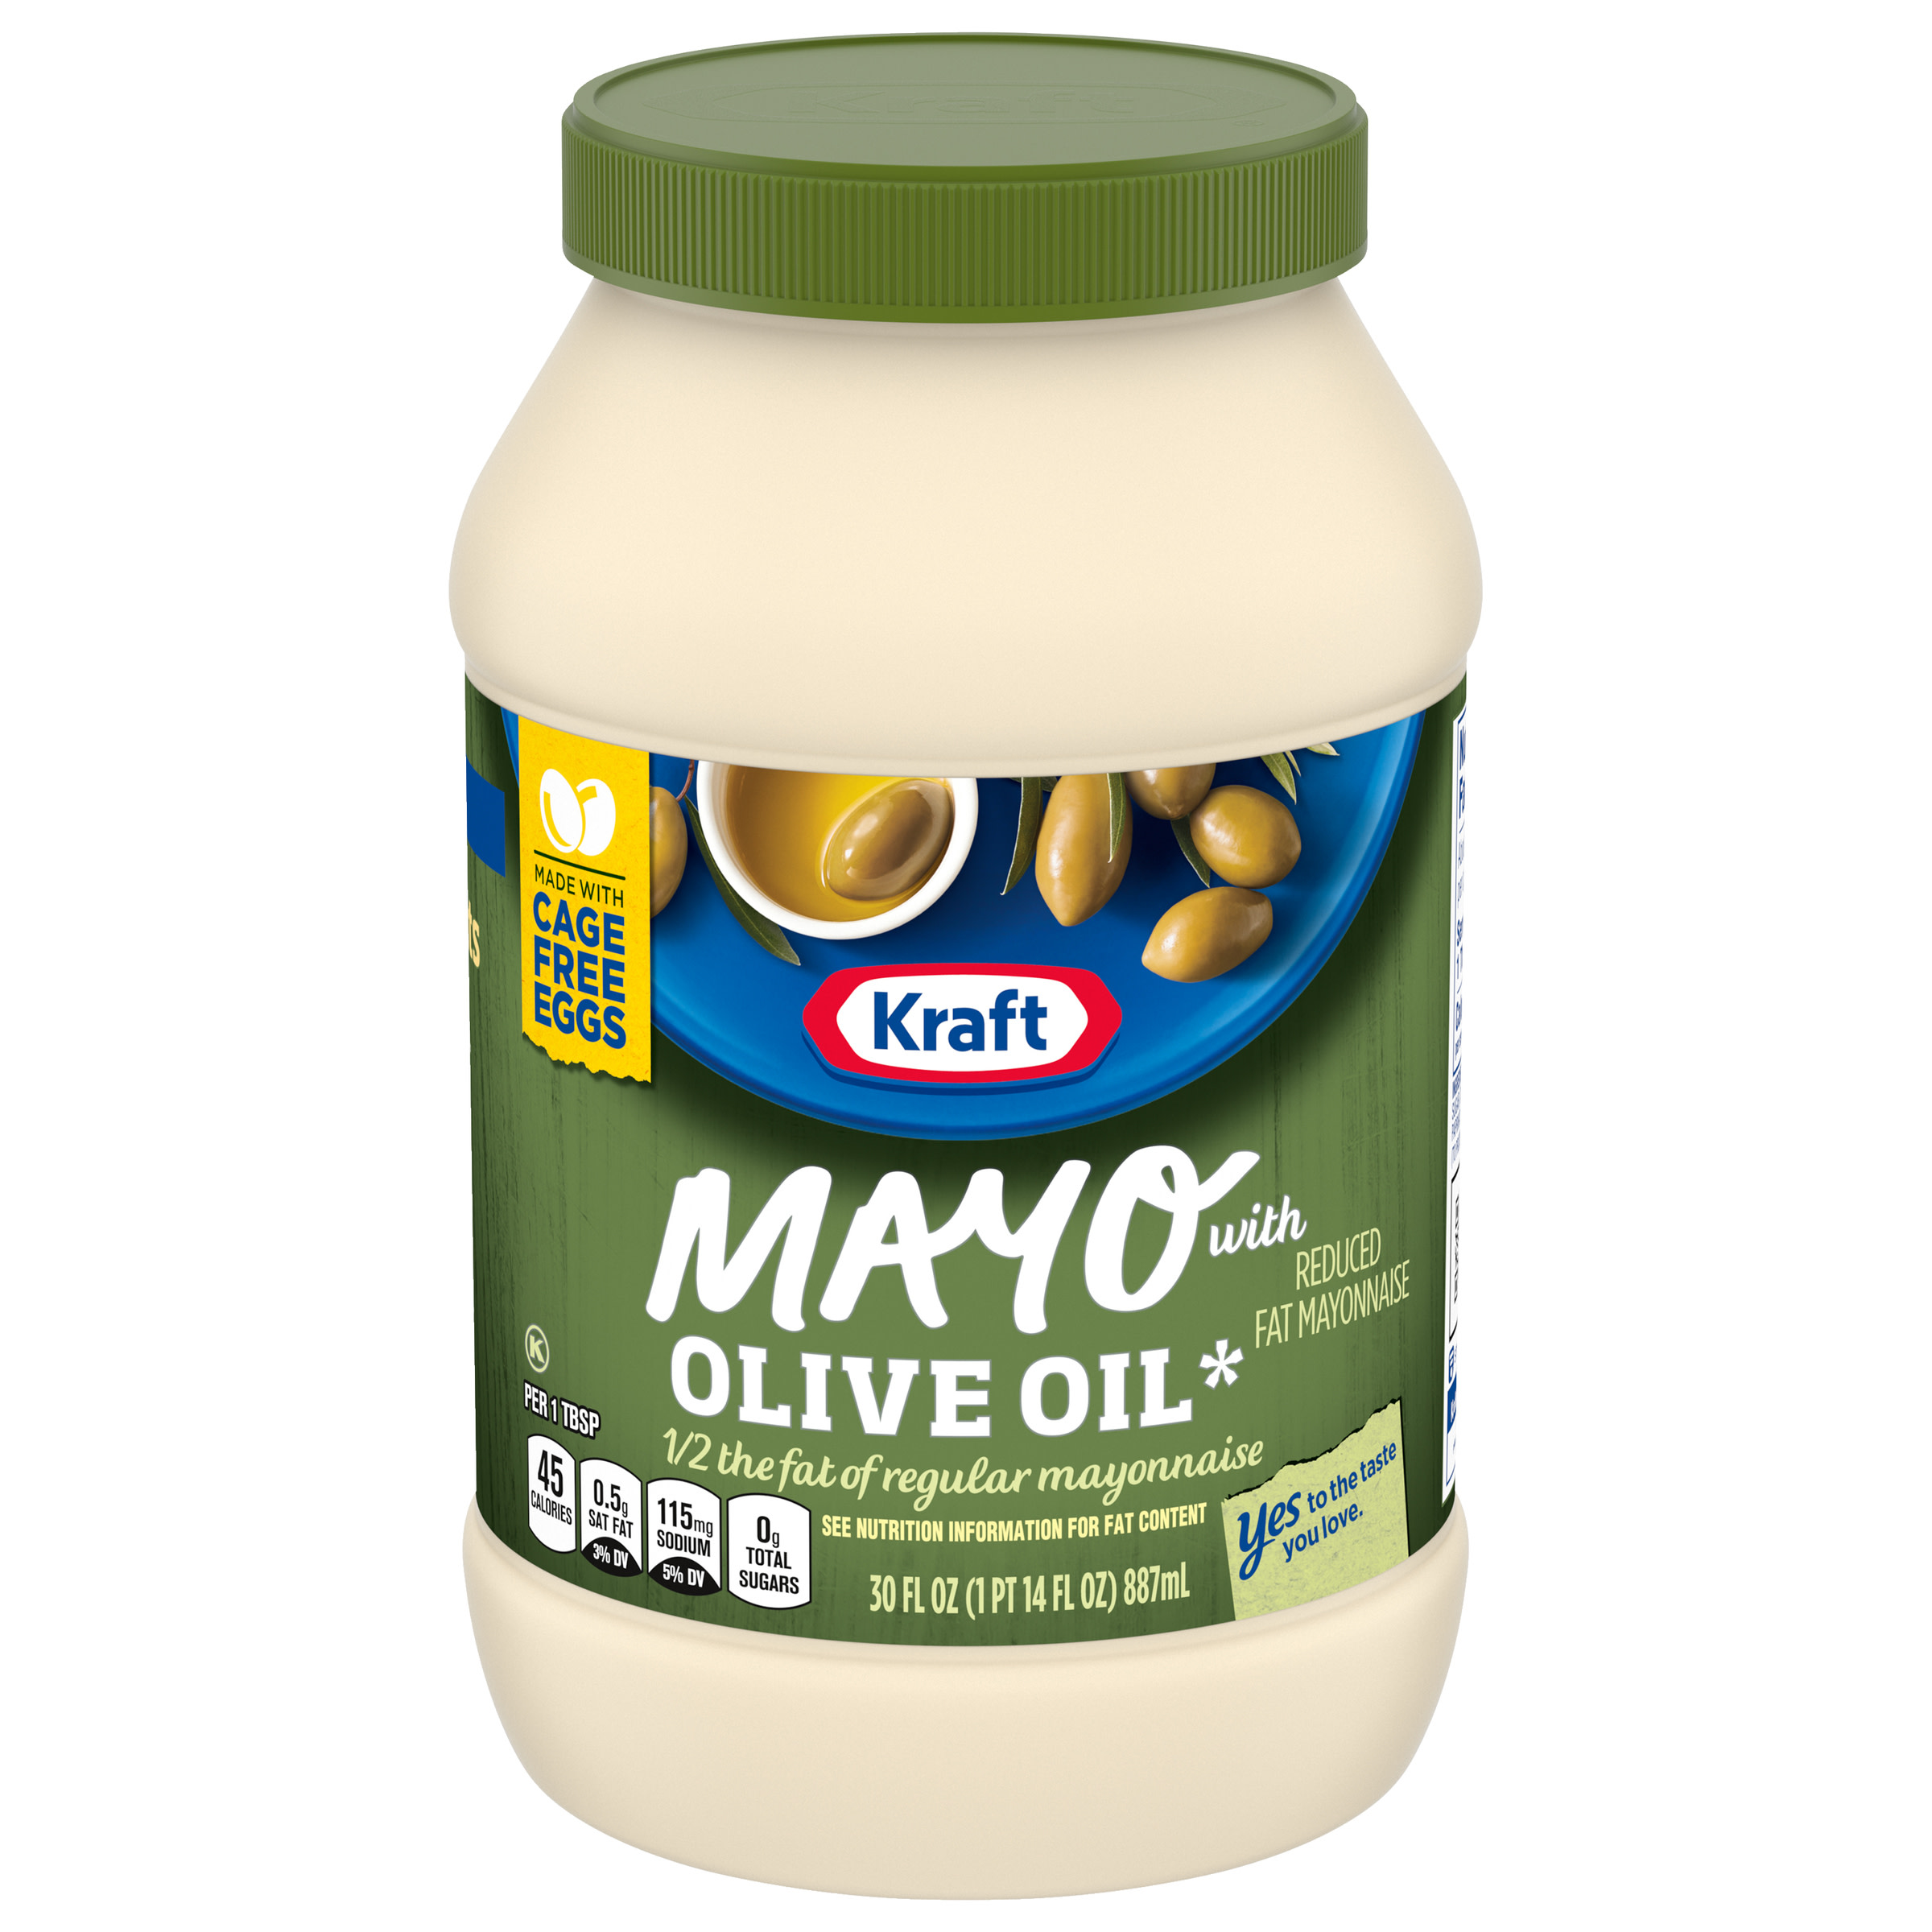 Kraft Mayo with Olive Oil Reduced Fat Mayonnaise, 30 fl oz Jar - image 1 of 16